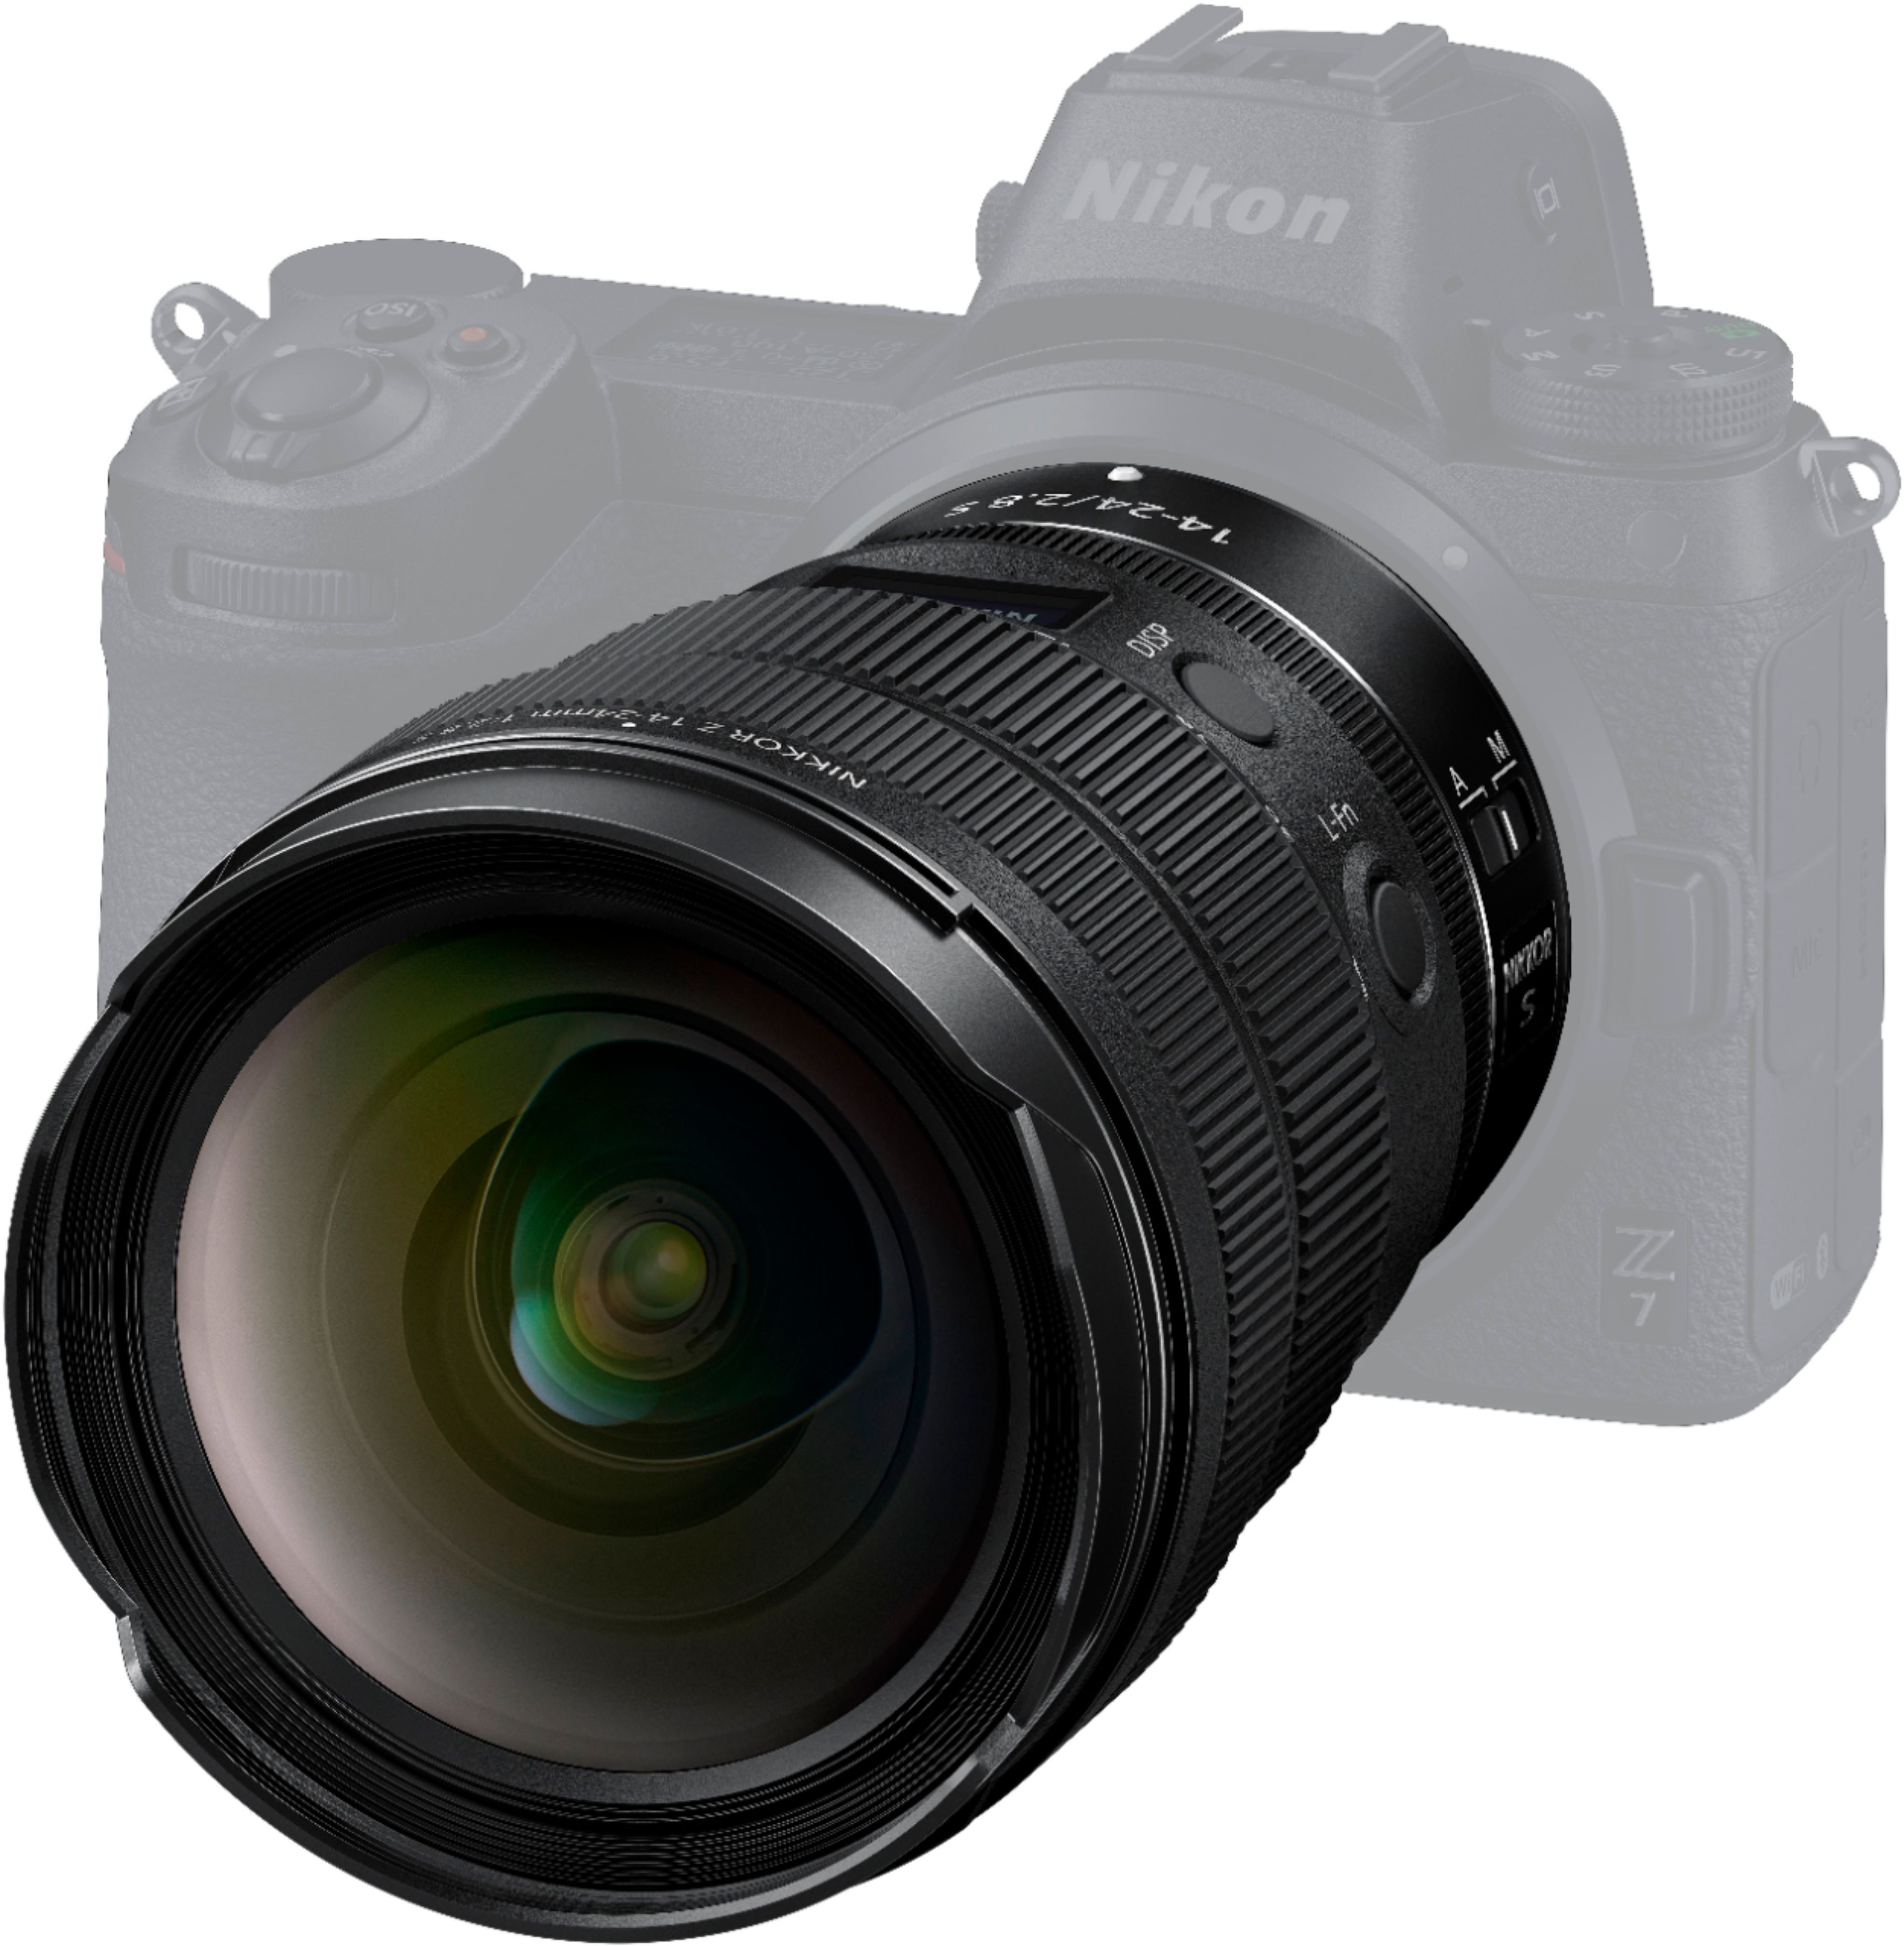 Back View: Sony - FE PZ 28-135mm f/4 G OSS Power Zoom Lens for Full-Frame, APS-C and Super 35 E-Mount Cameras - Black